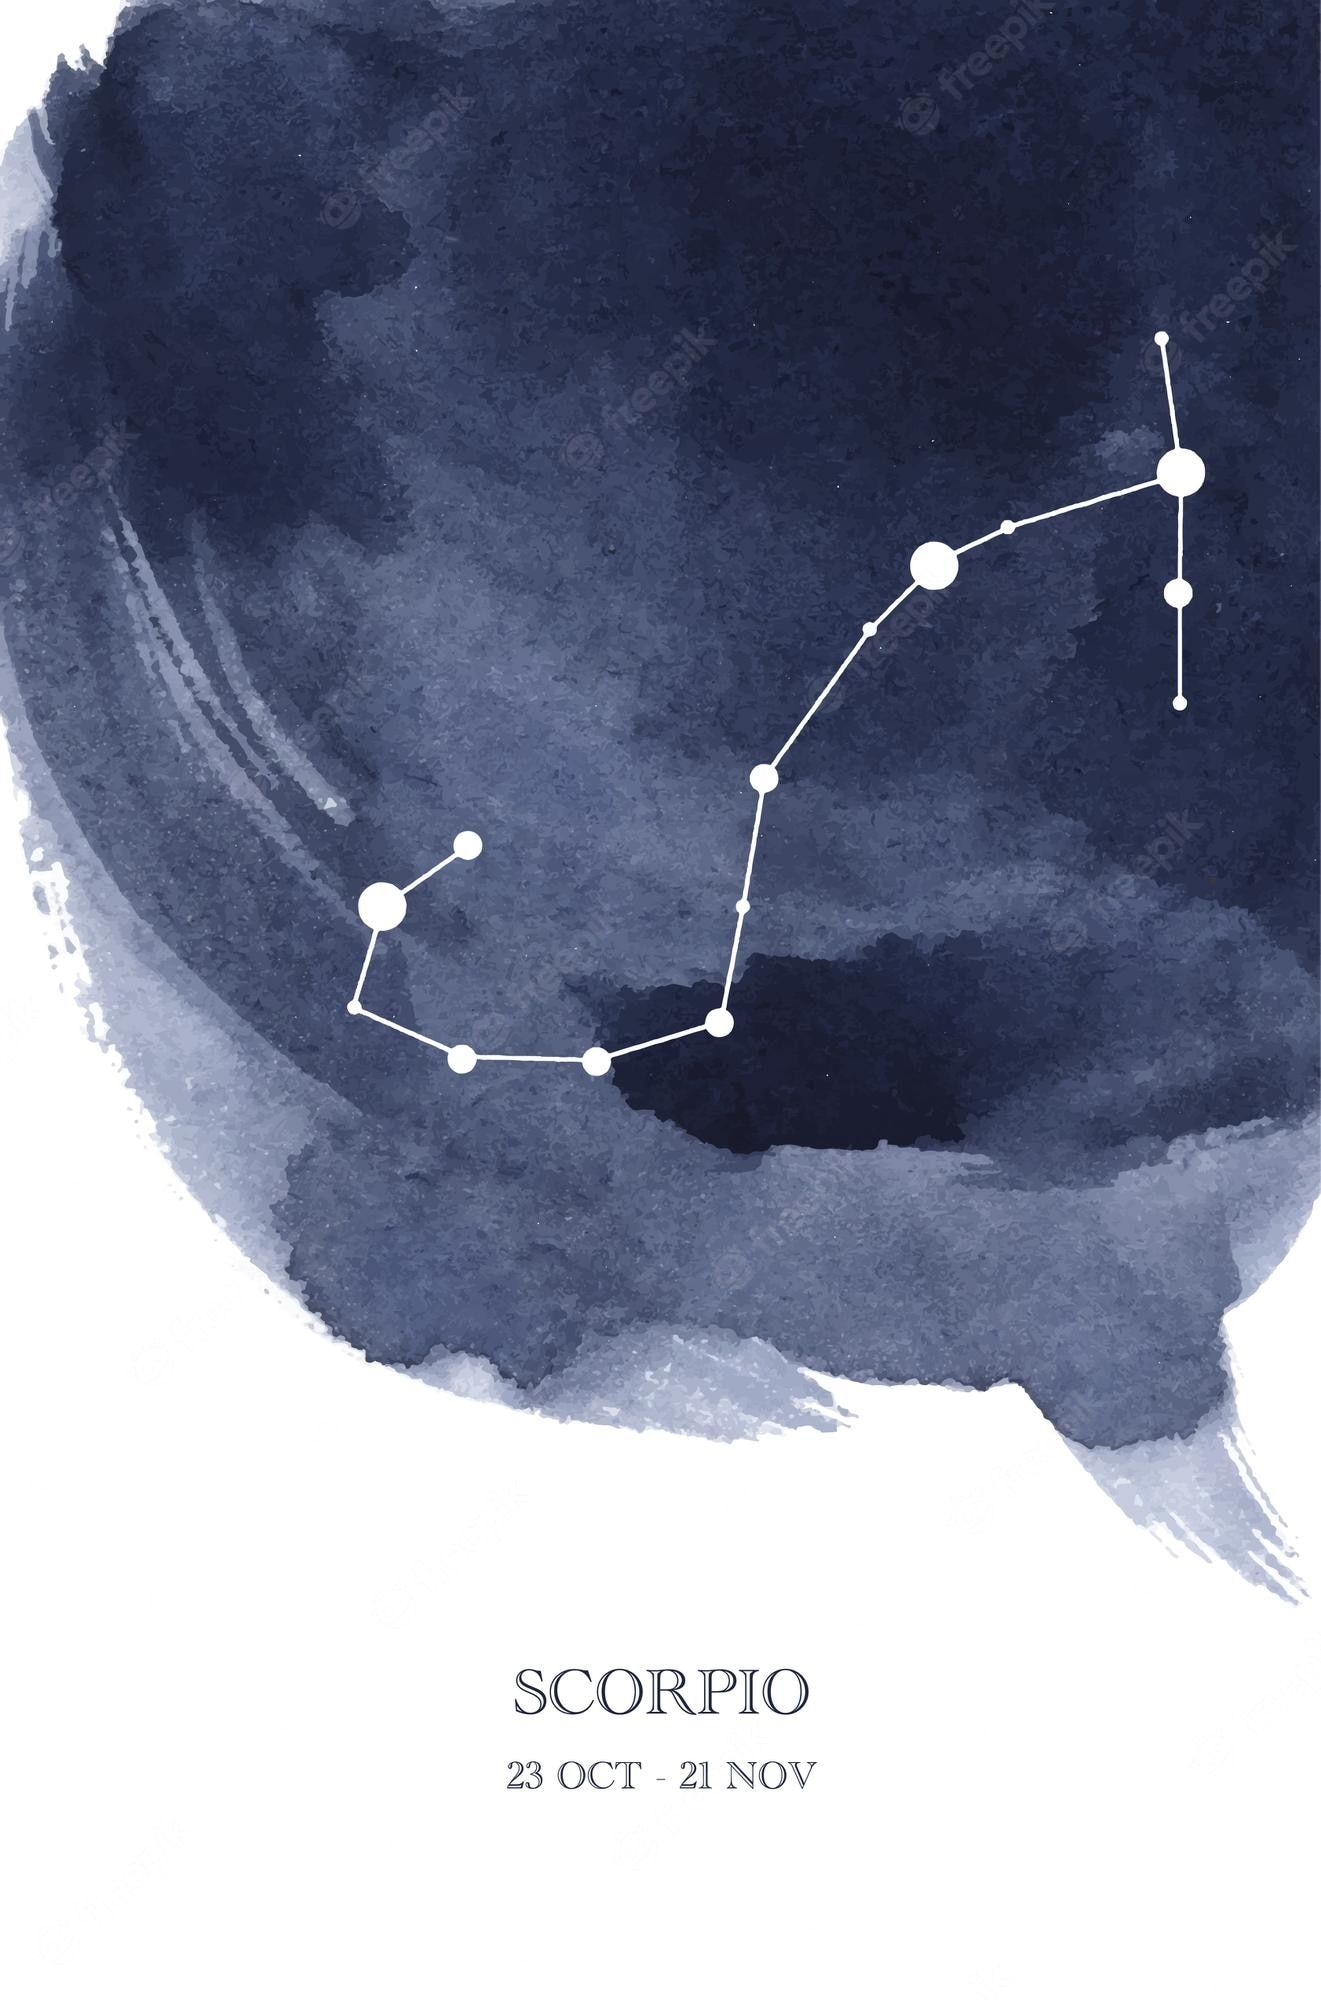 Premium Vector. Scorpio constellation astrology watercolor illustration. scorpio horoscope symbol made of star sparkles and lines